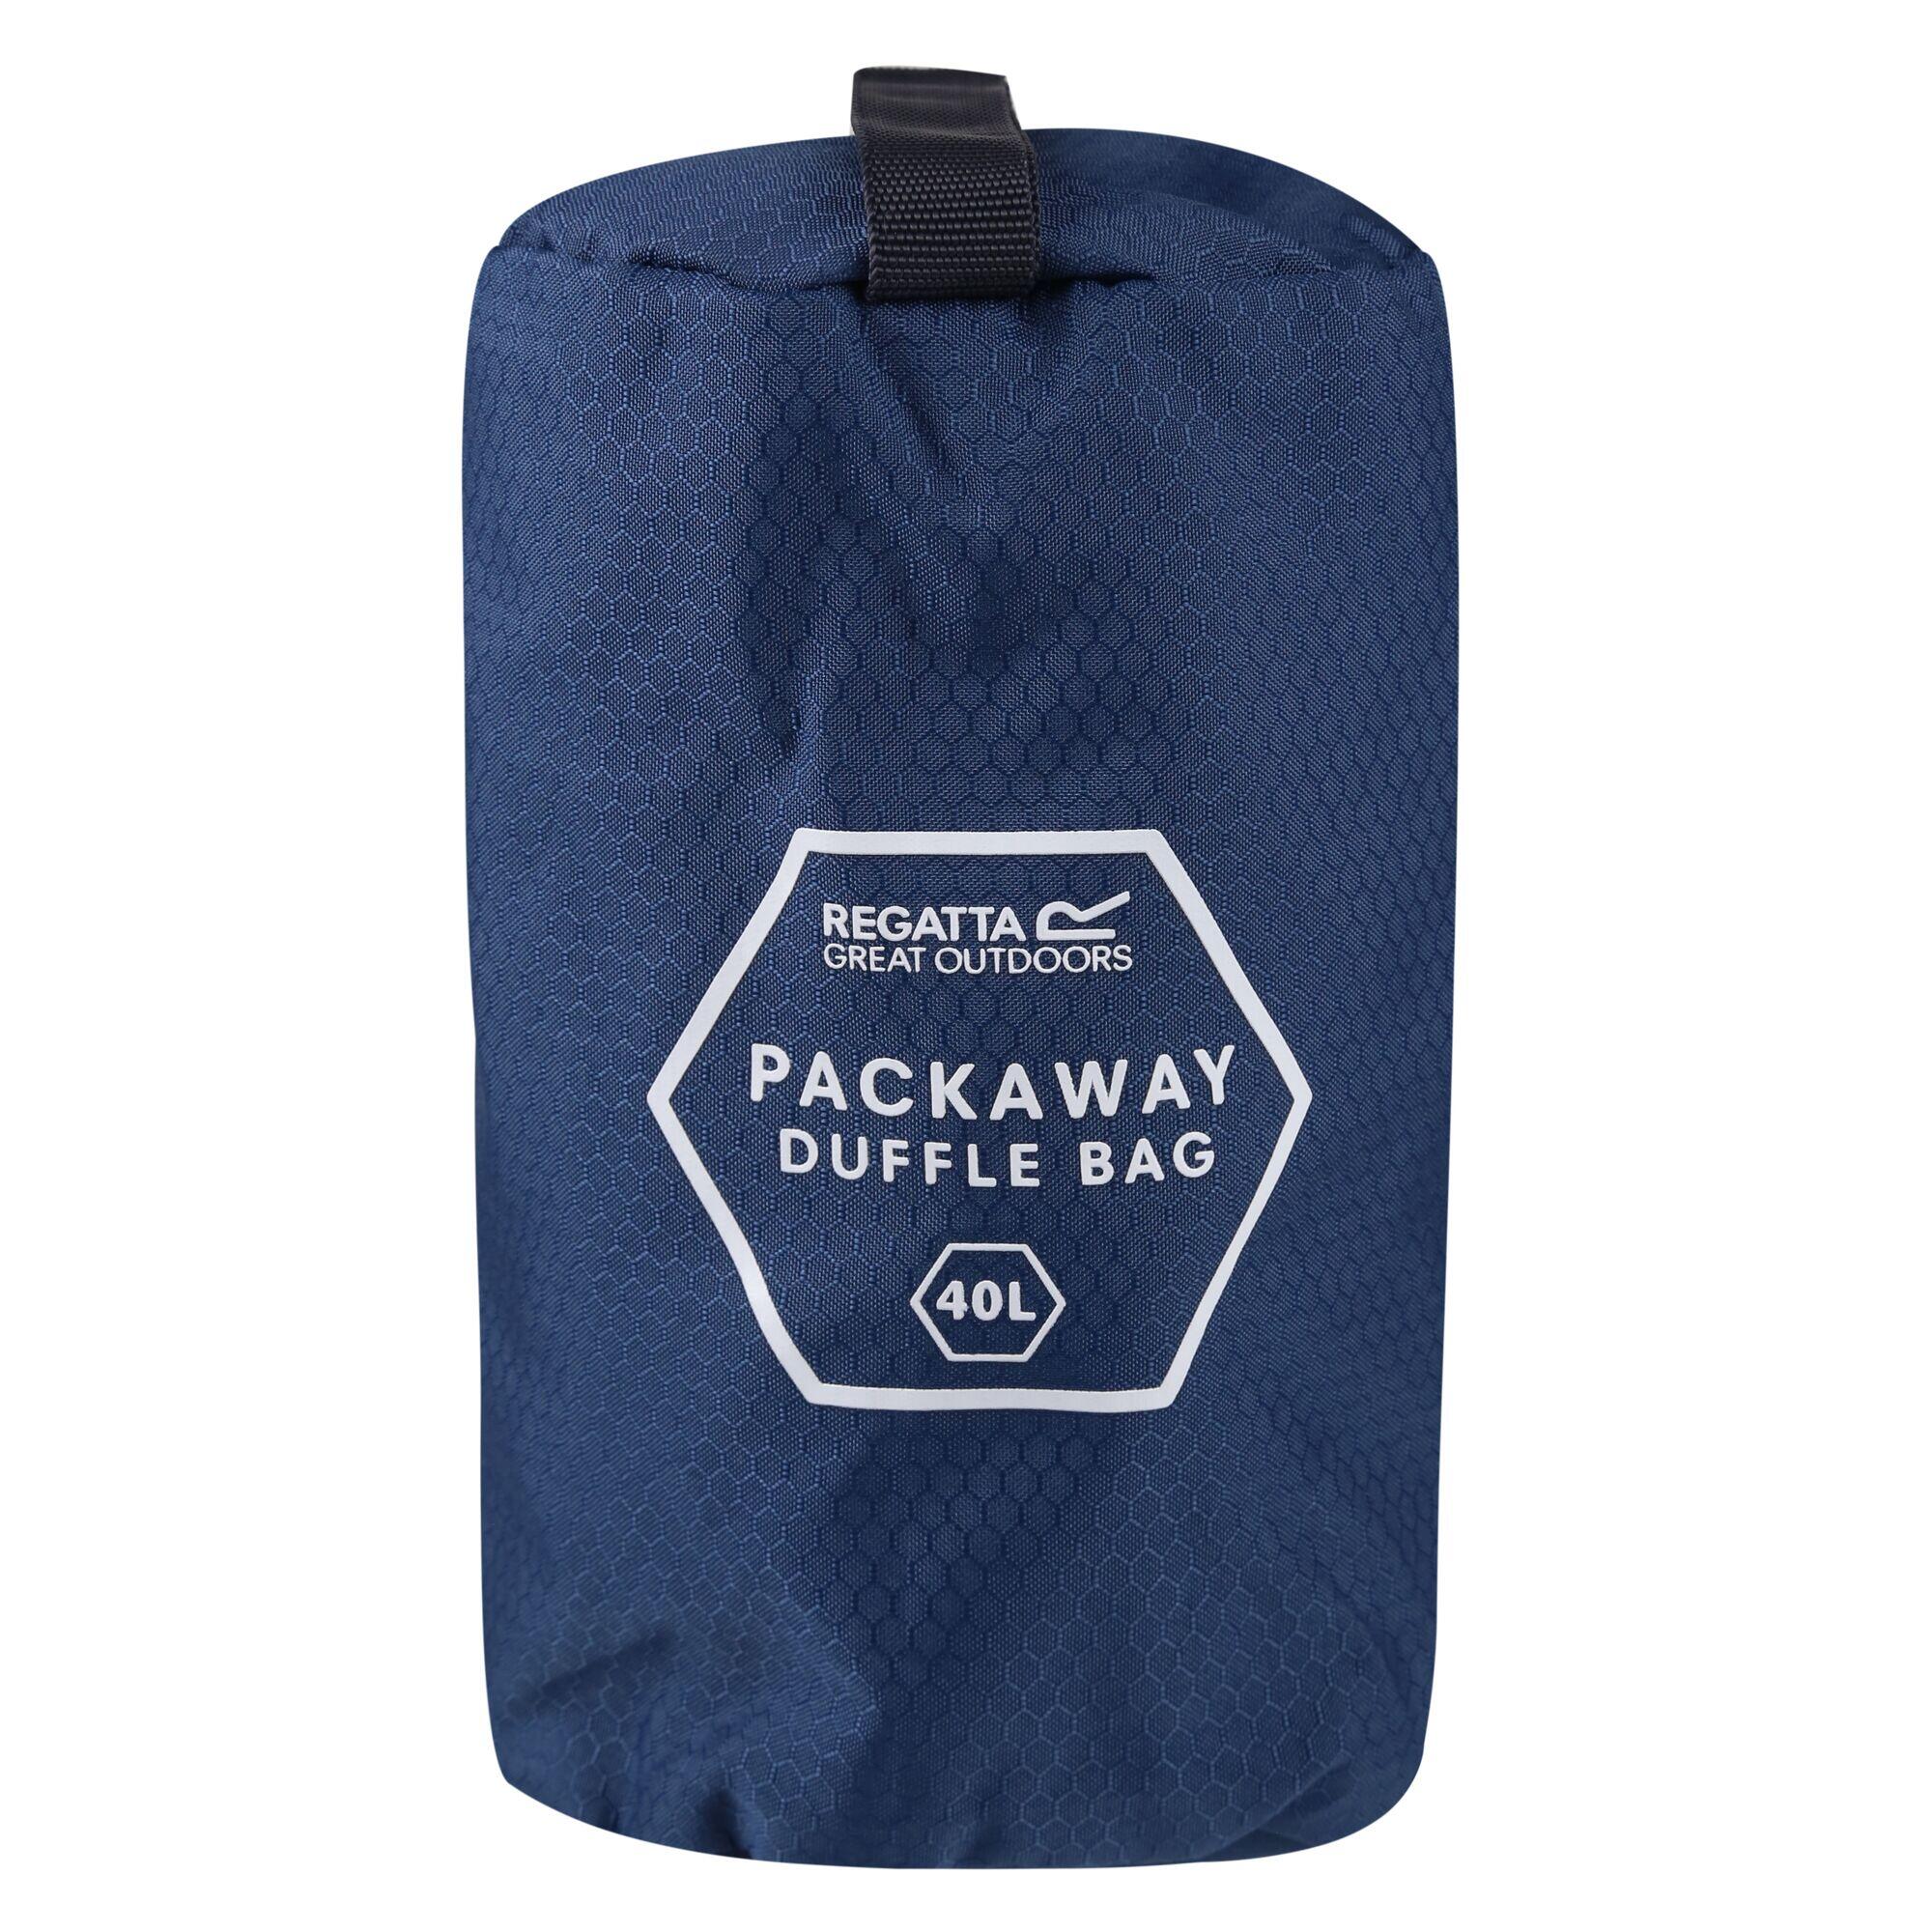 Packaway 40L Adults' Unisex Fitness Duffle Bag - Dark Denim Nautical Blue 4/4